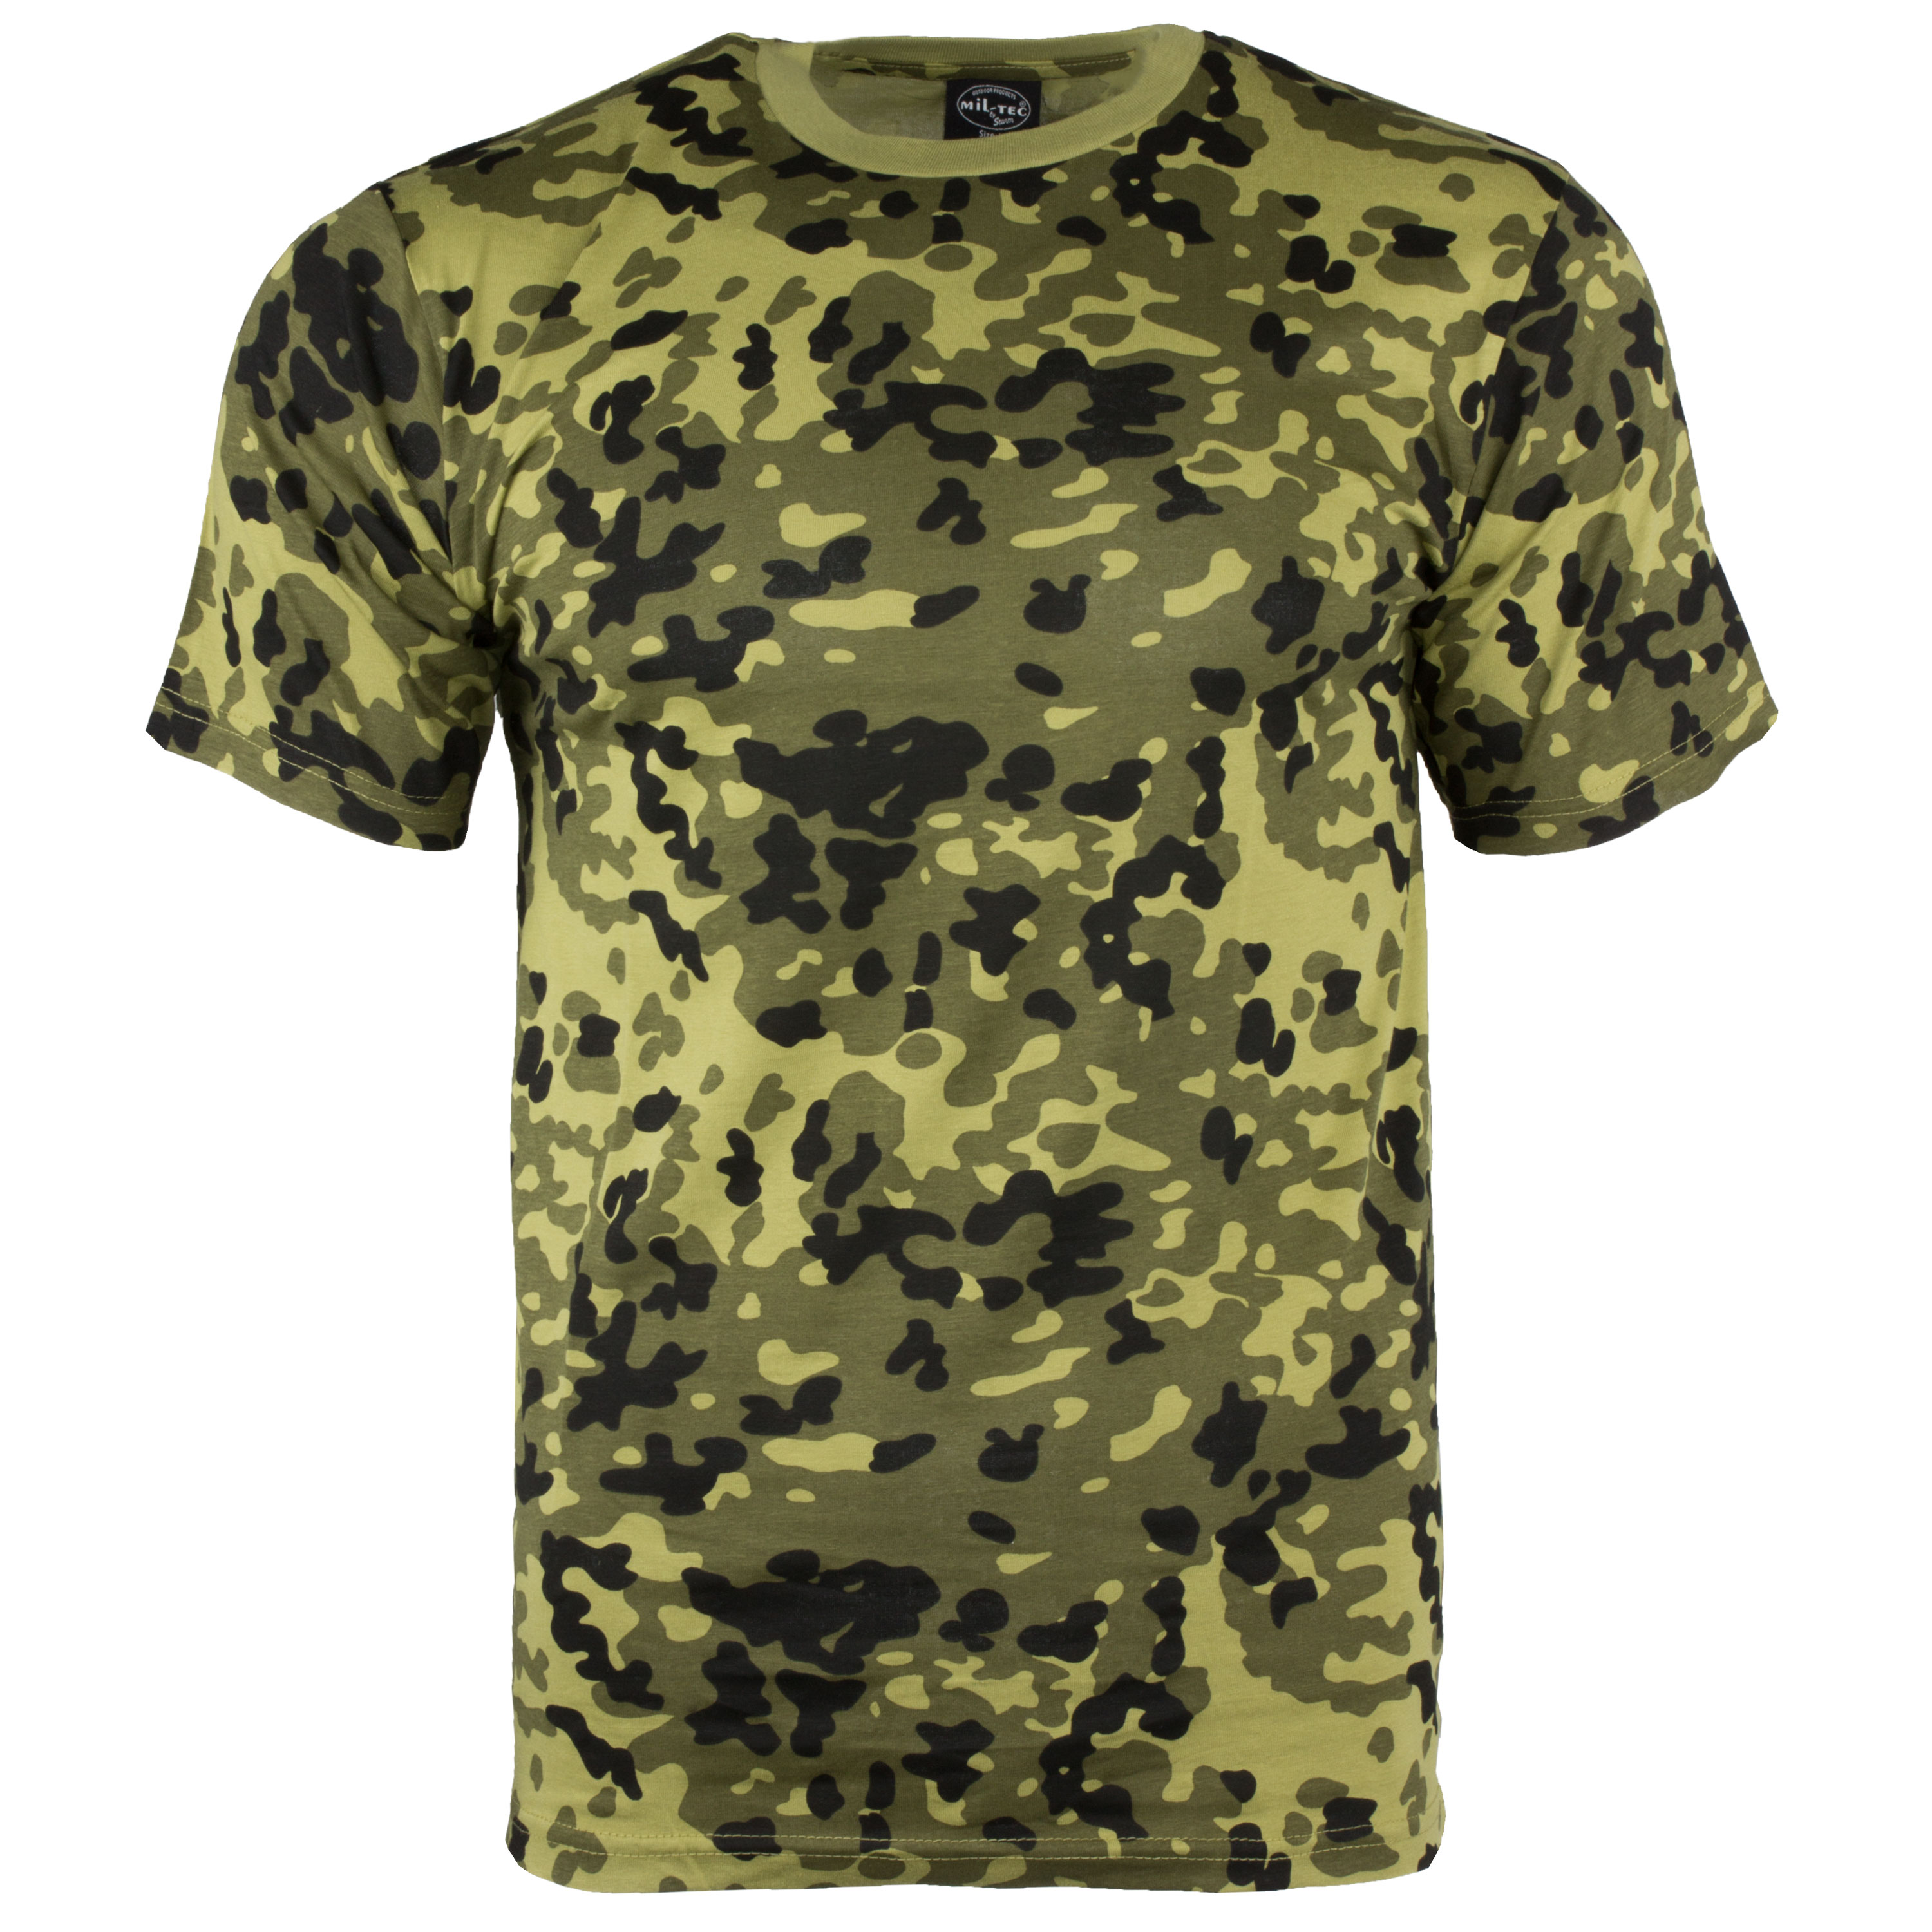 T-Shirt danish-camo | T-Shirt danish-camo | Shirts | Shirts | Men ...